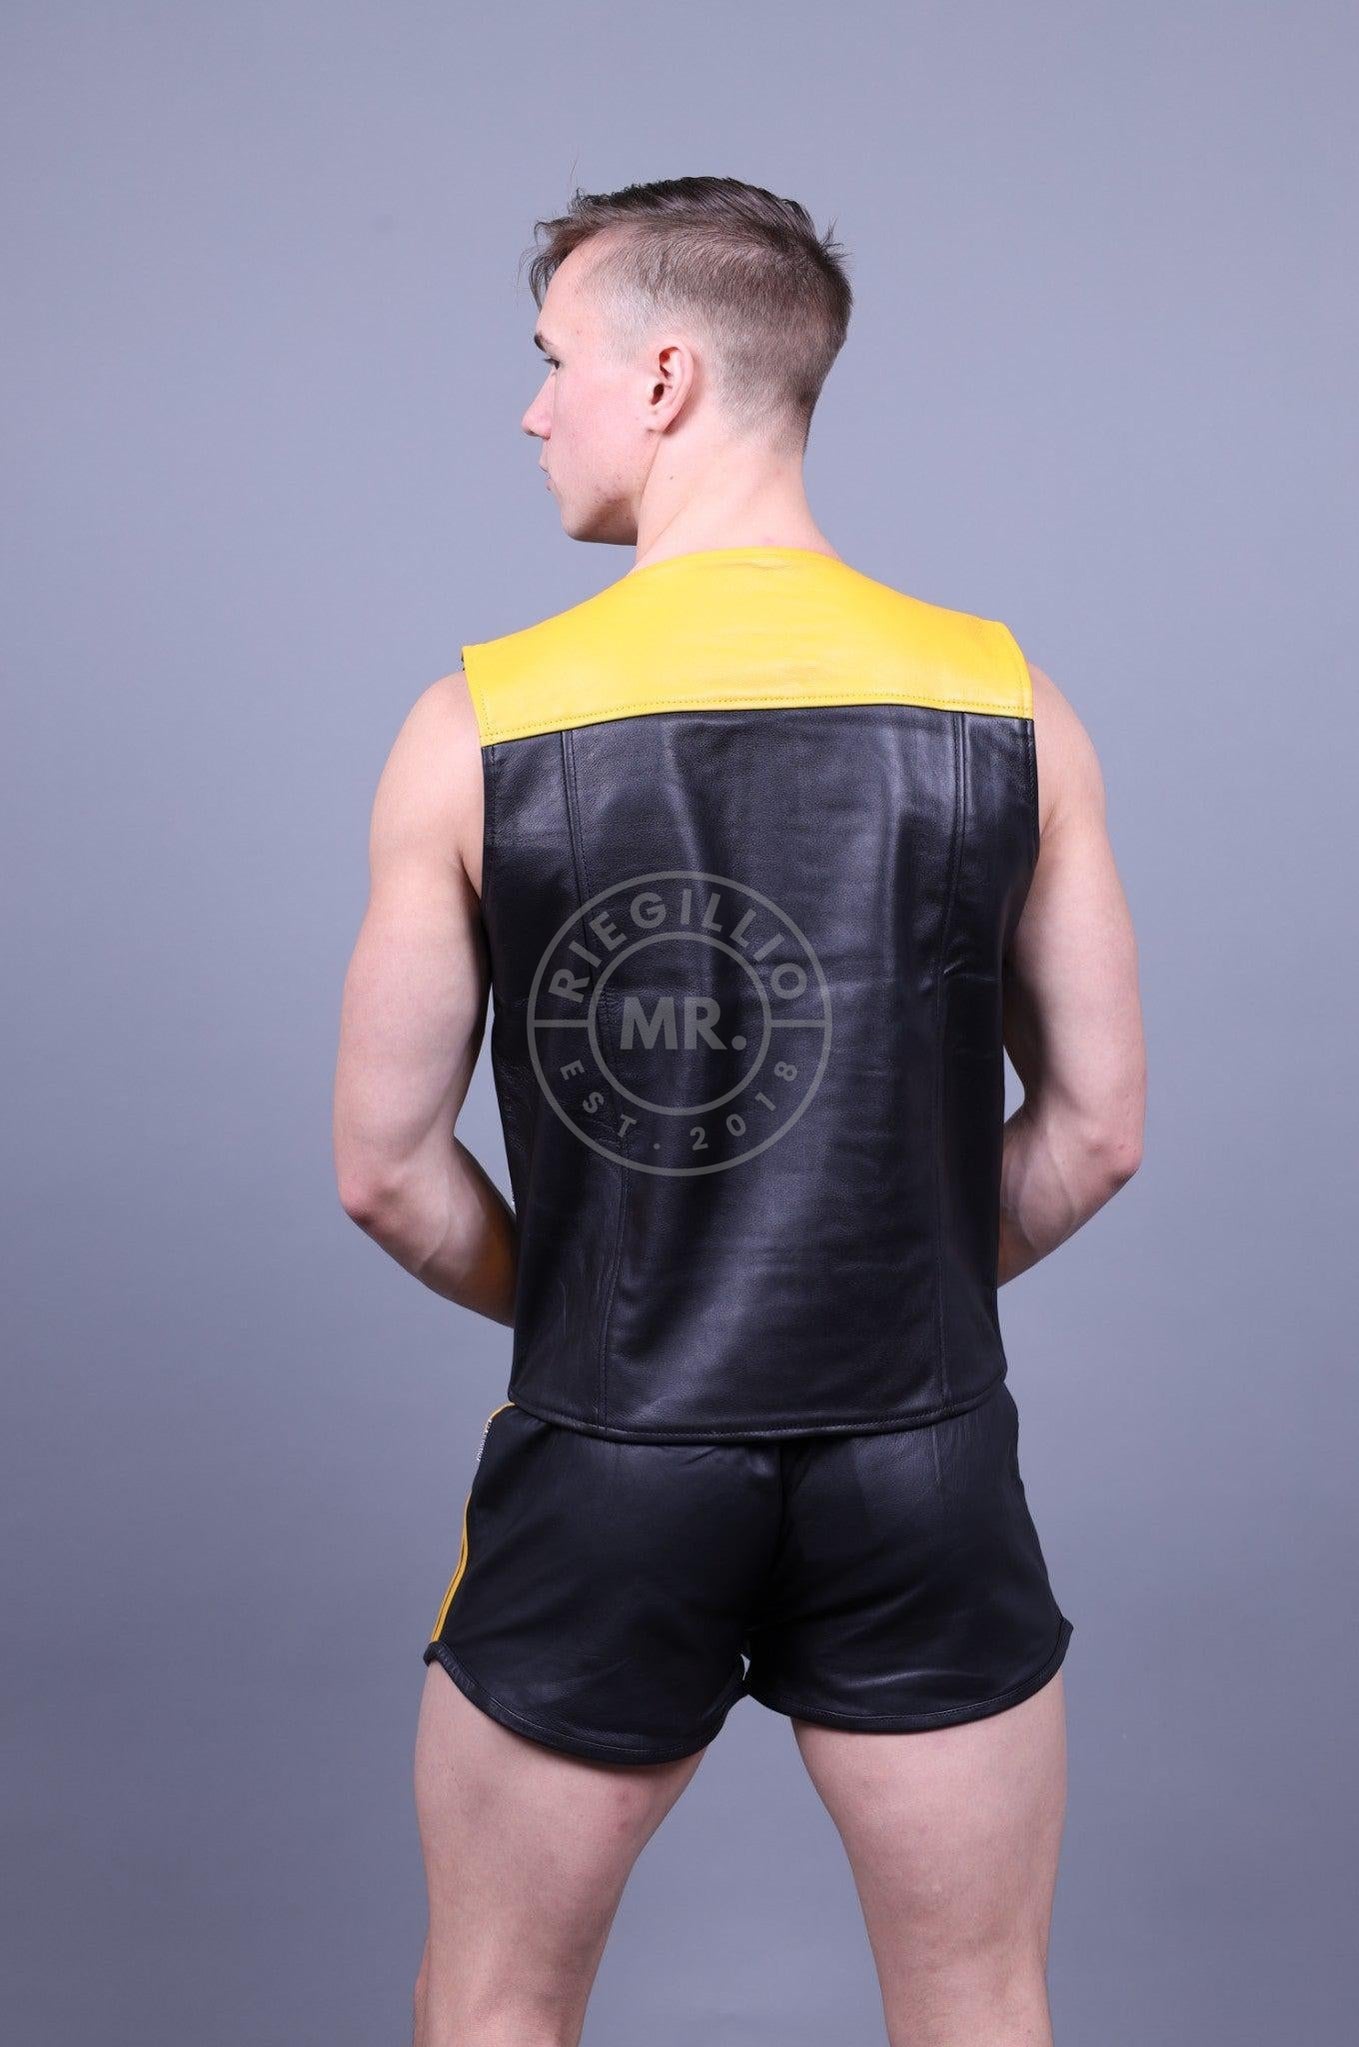 Leather Zipper Vest - Yellow Panels at MR. Riegillio